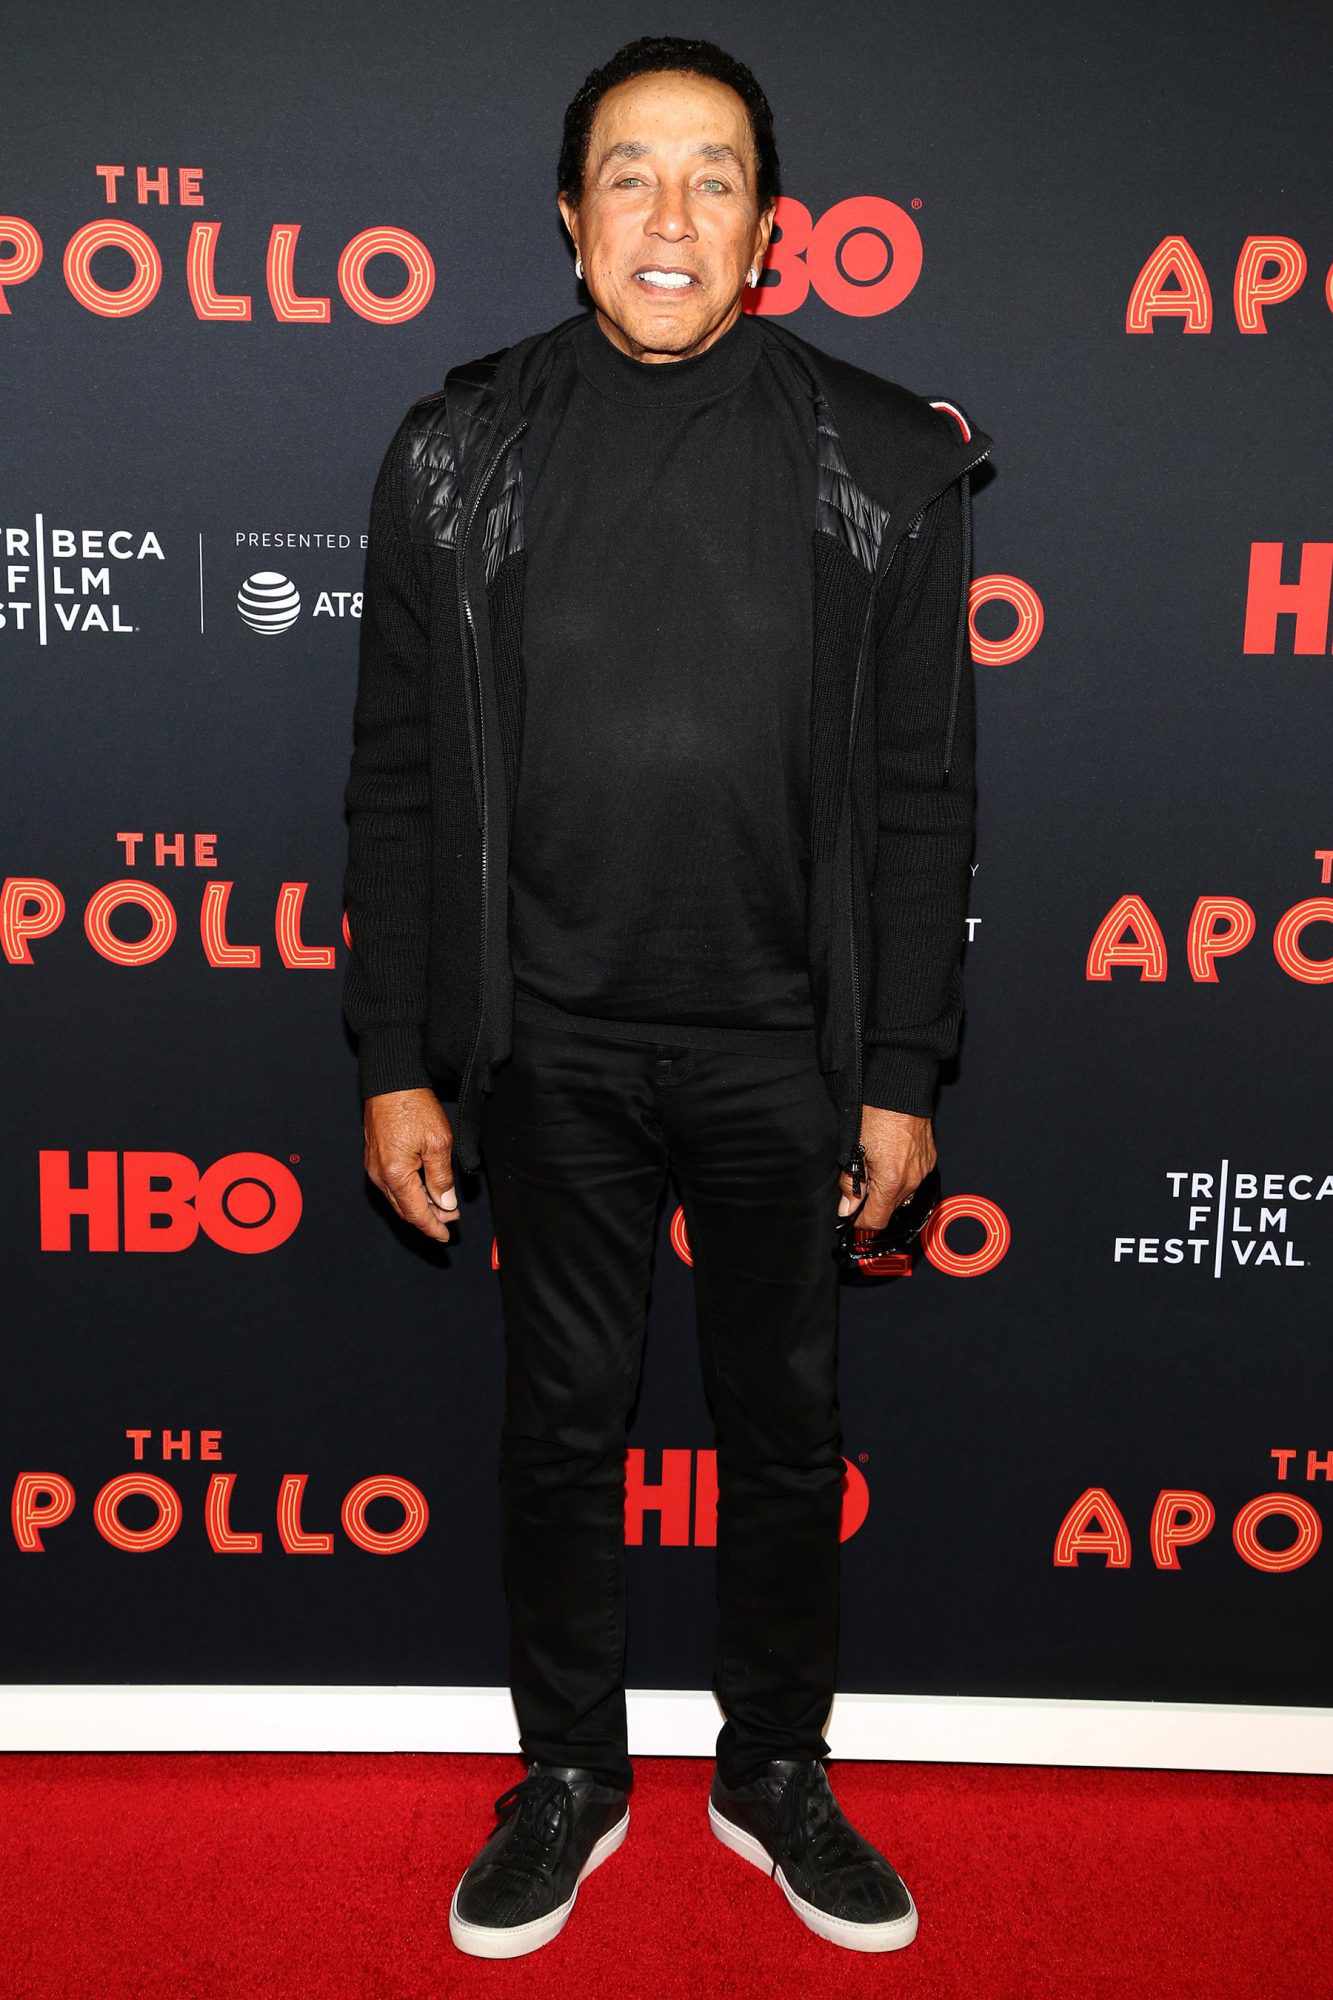 18th Annual Tribeca Film Festival 2019 Opening Night Screening Of "The Apollo"